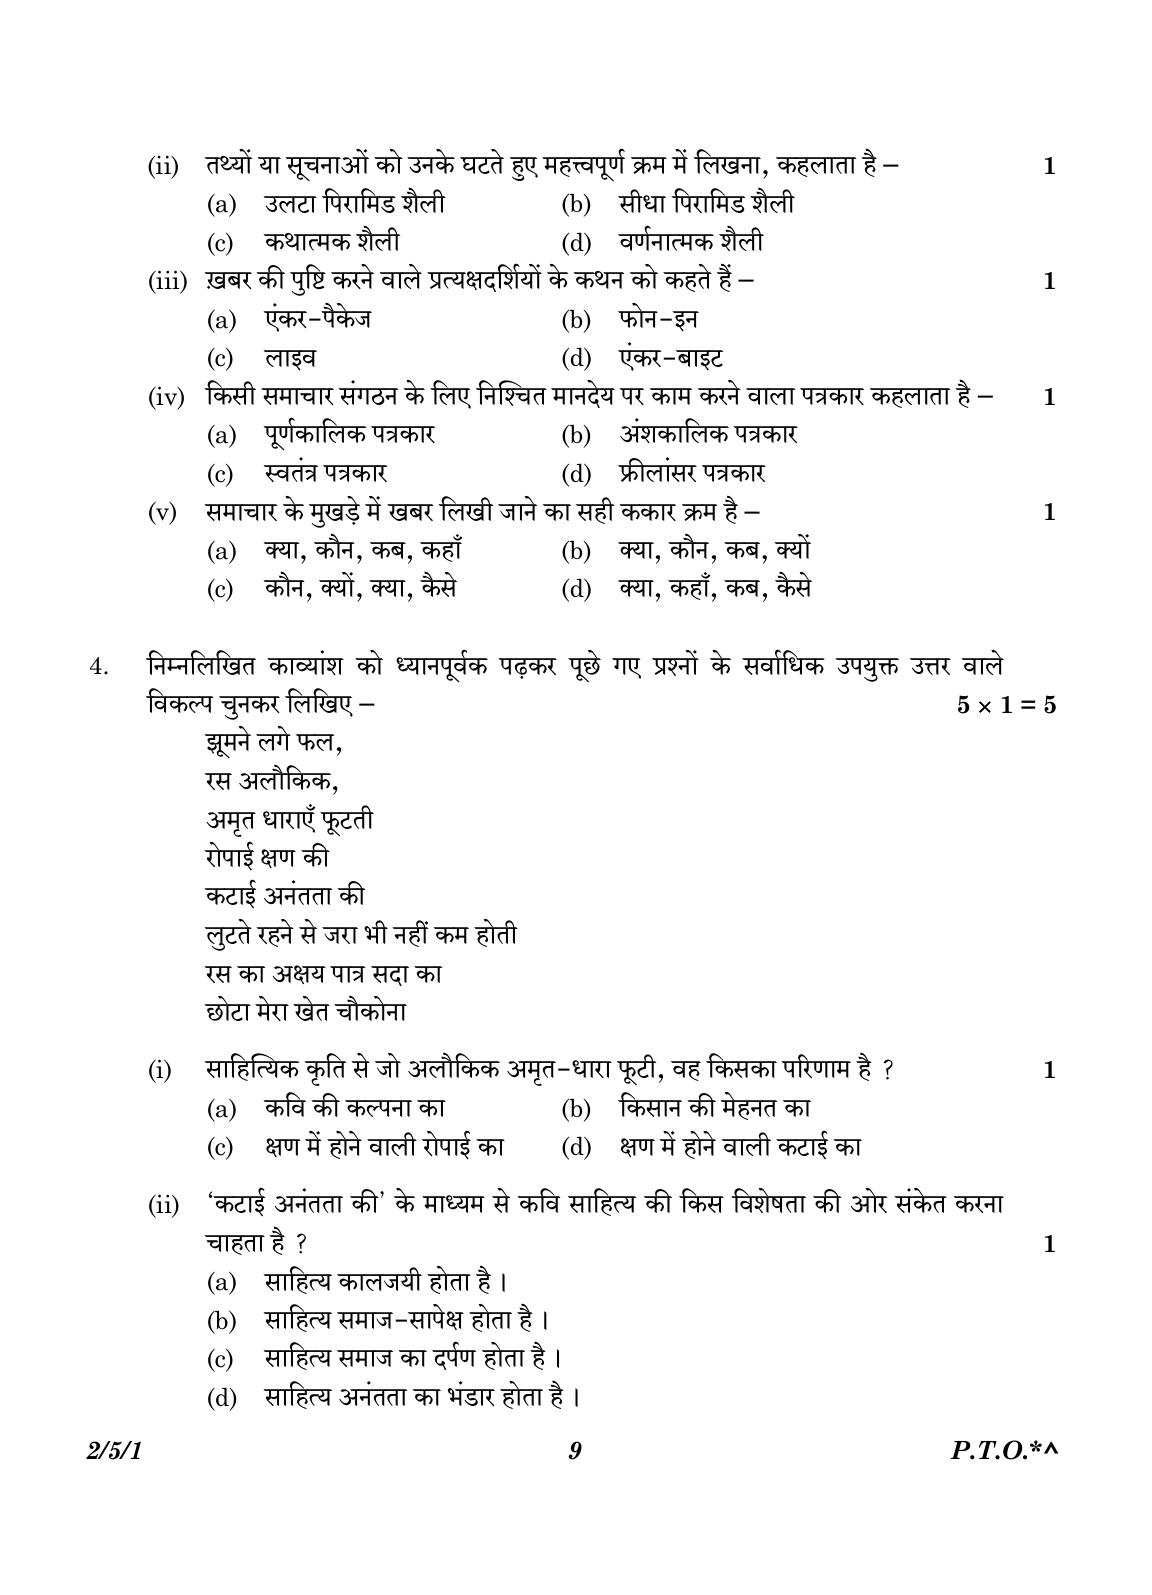 CBSE Class 12 2-5-1 Hindi Core version 2023 Question Paper - Page 9